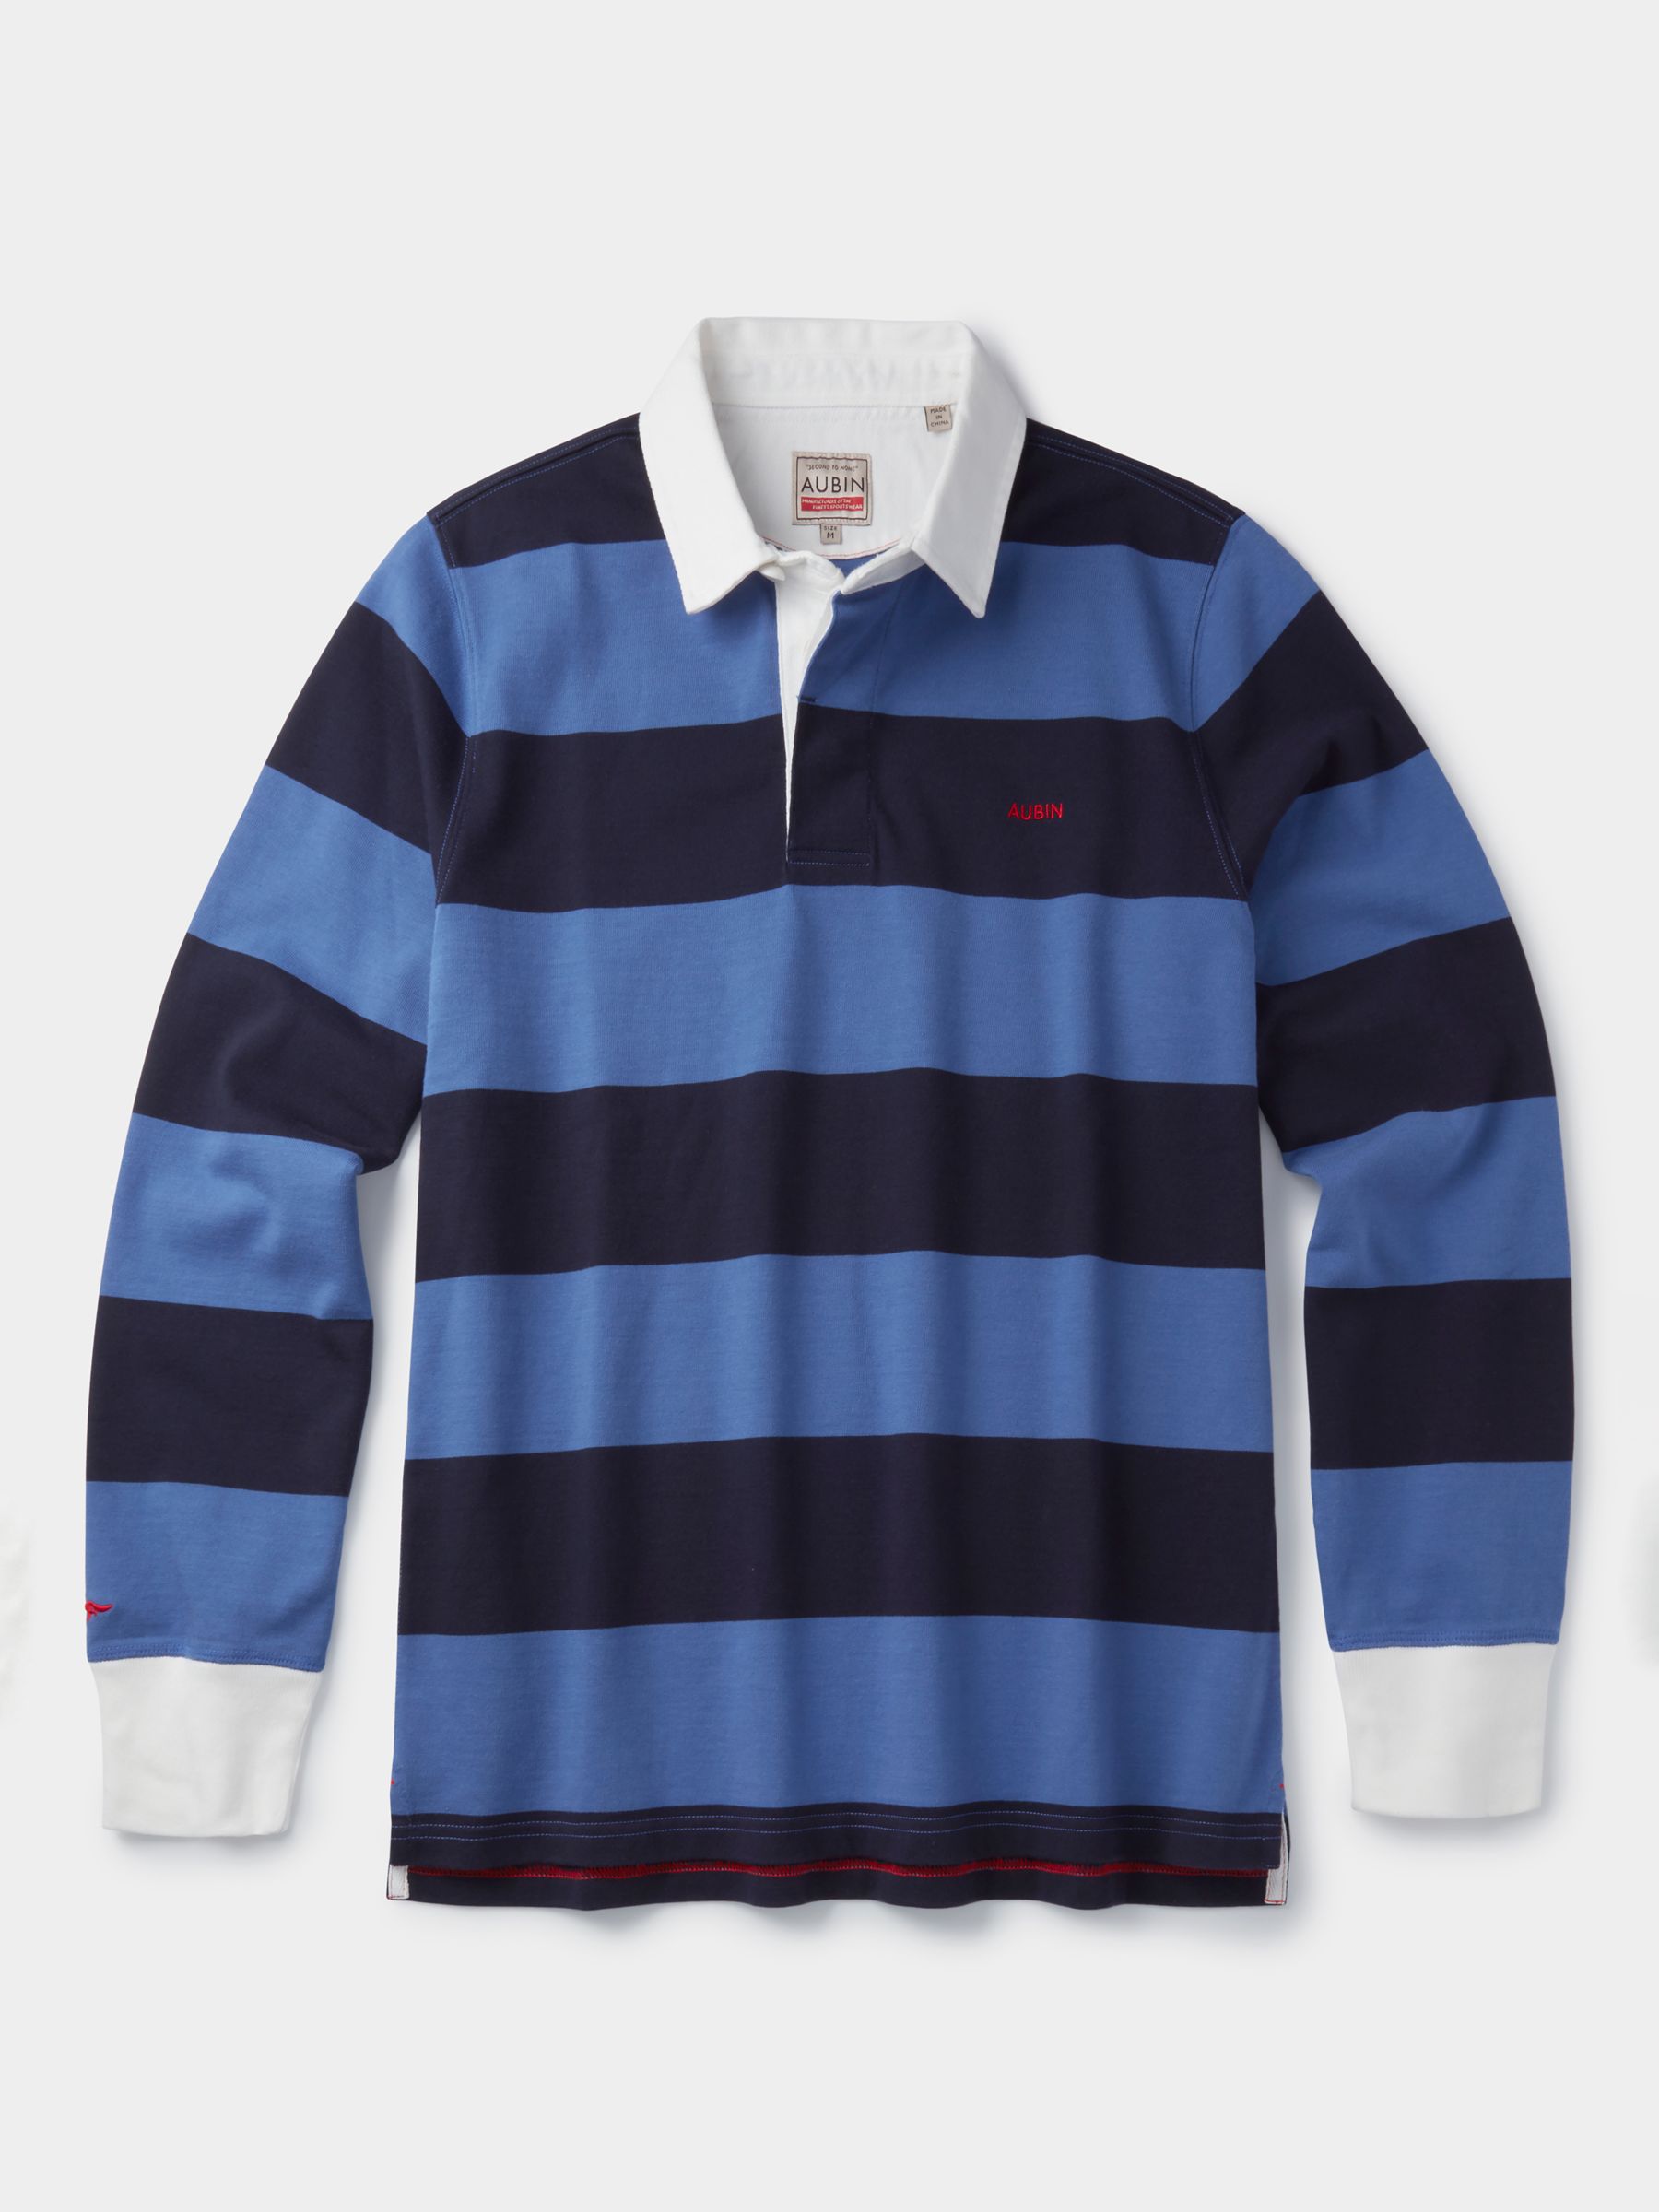 Aubin Skelton Rugby Shirt, Blue/Multi, S